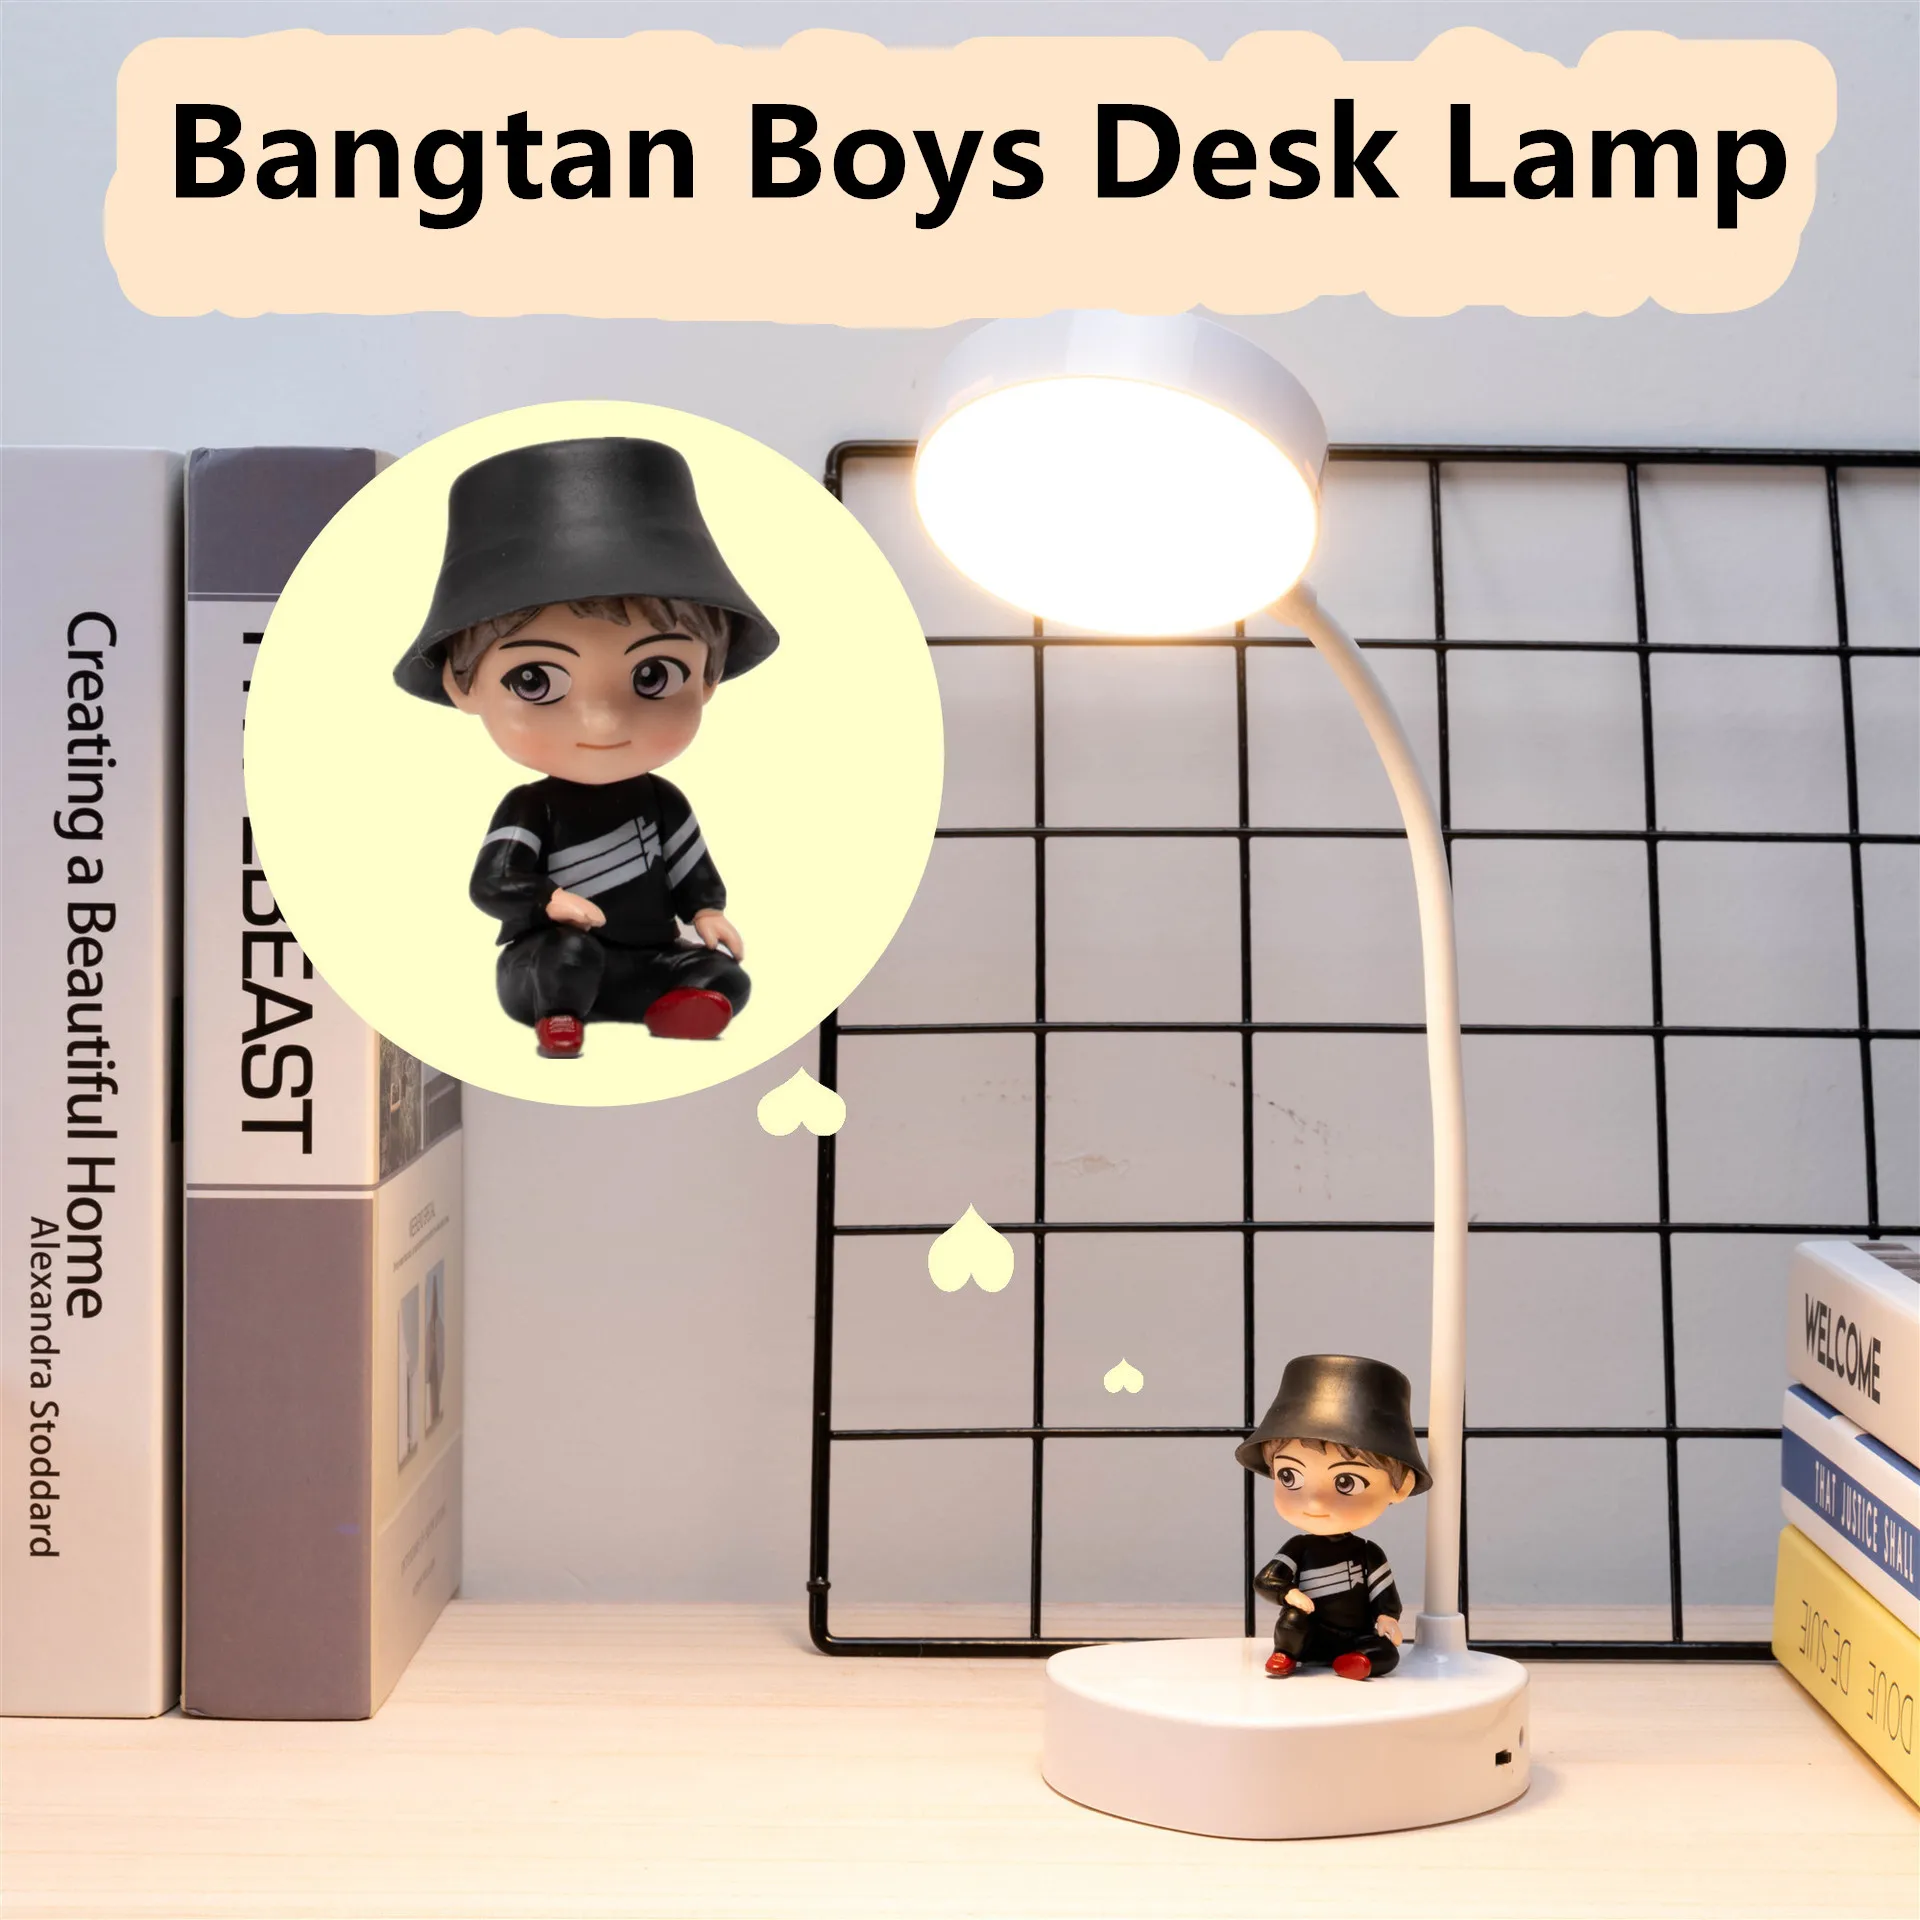 Bangtan Boys-figuras de acción TinyTAN de dibujos animados, luz LED de noche con carga USB, lámpara pequeña de escritorio en dormitorio, lámpara de mesa plegable, novedad